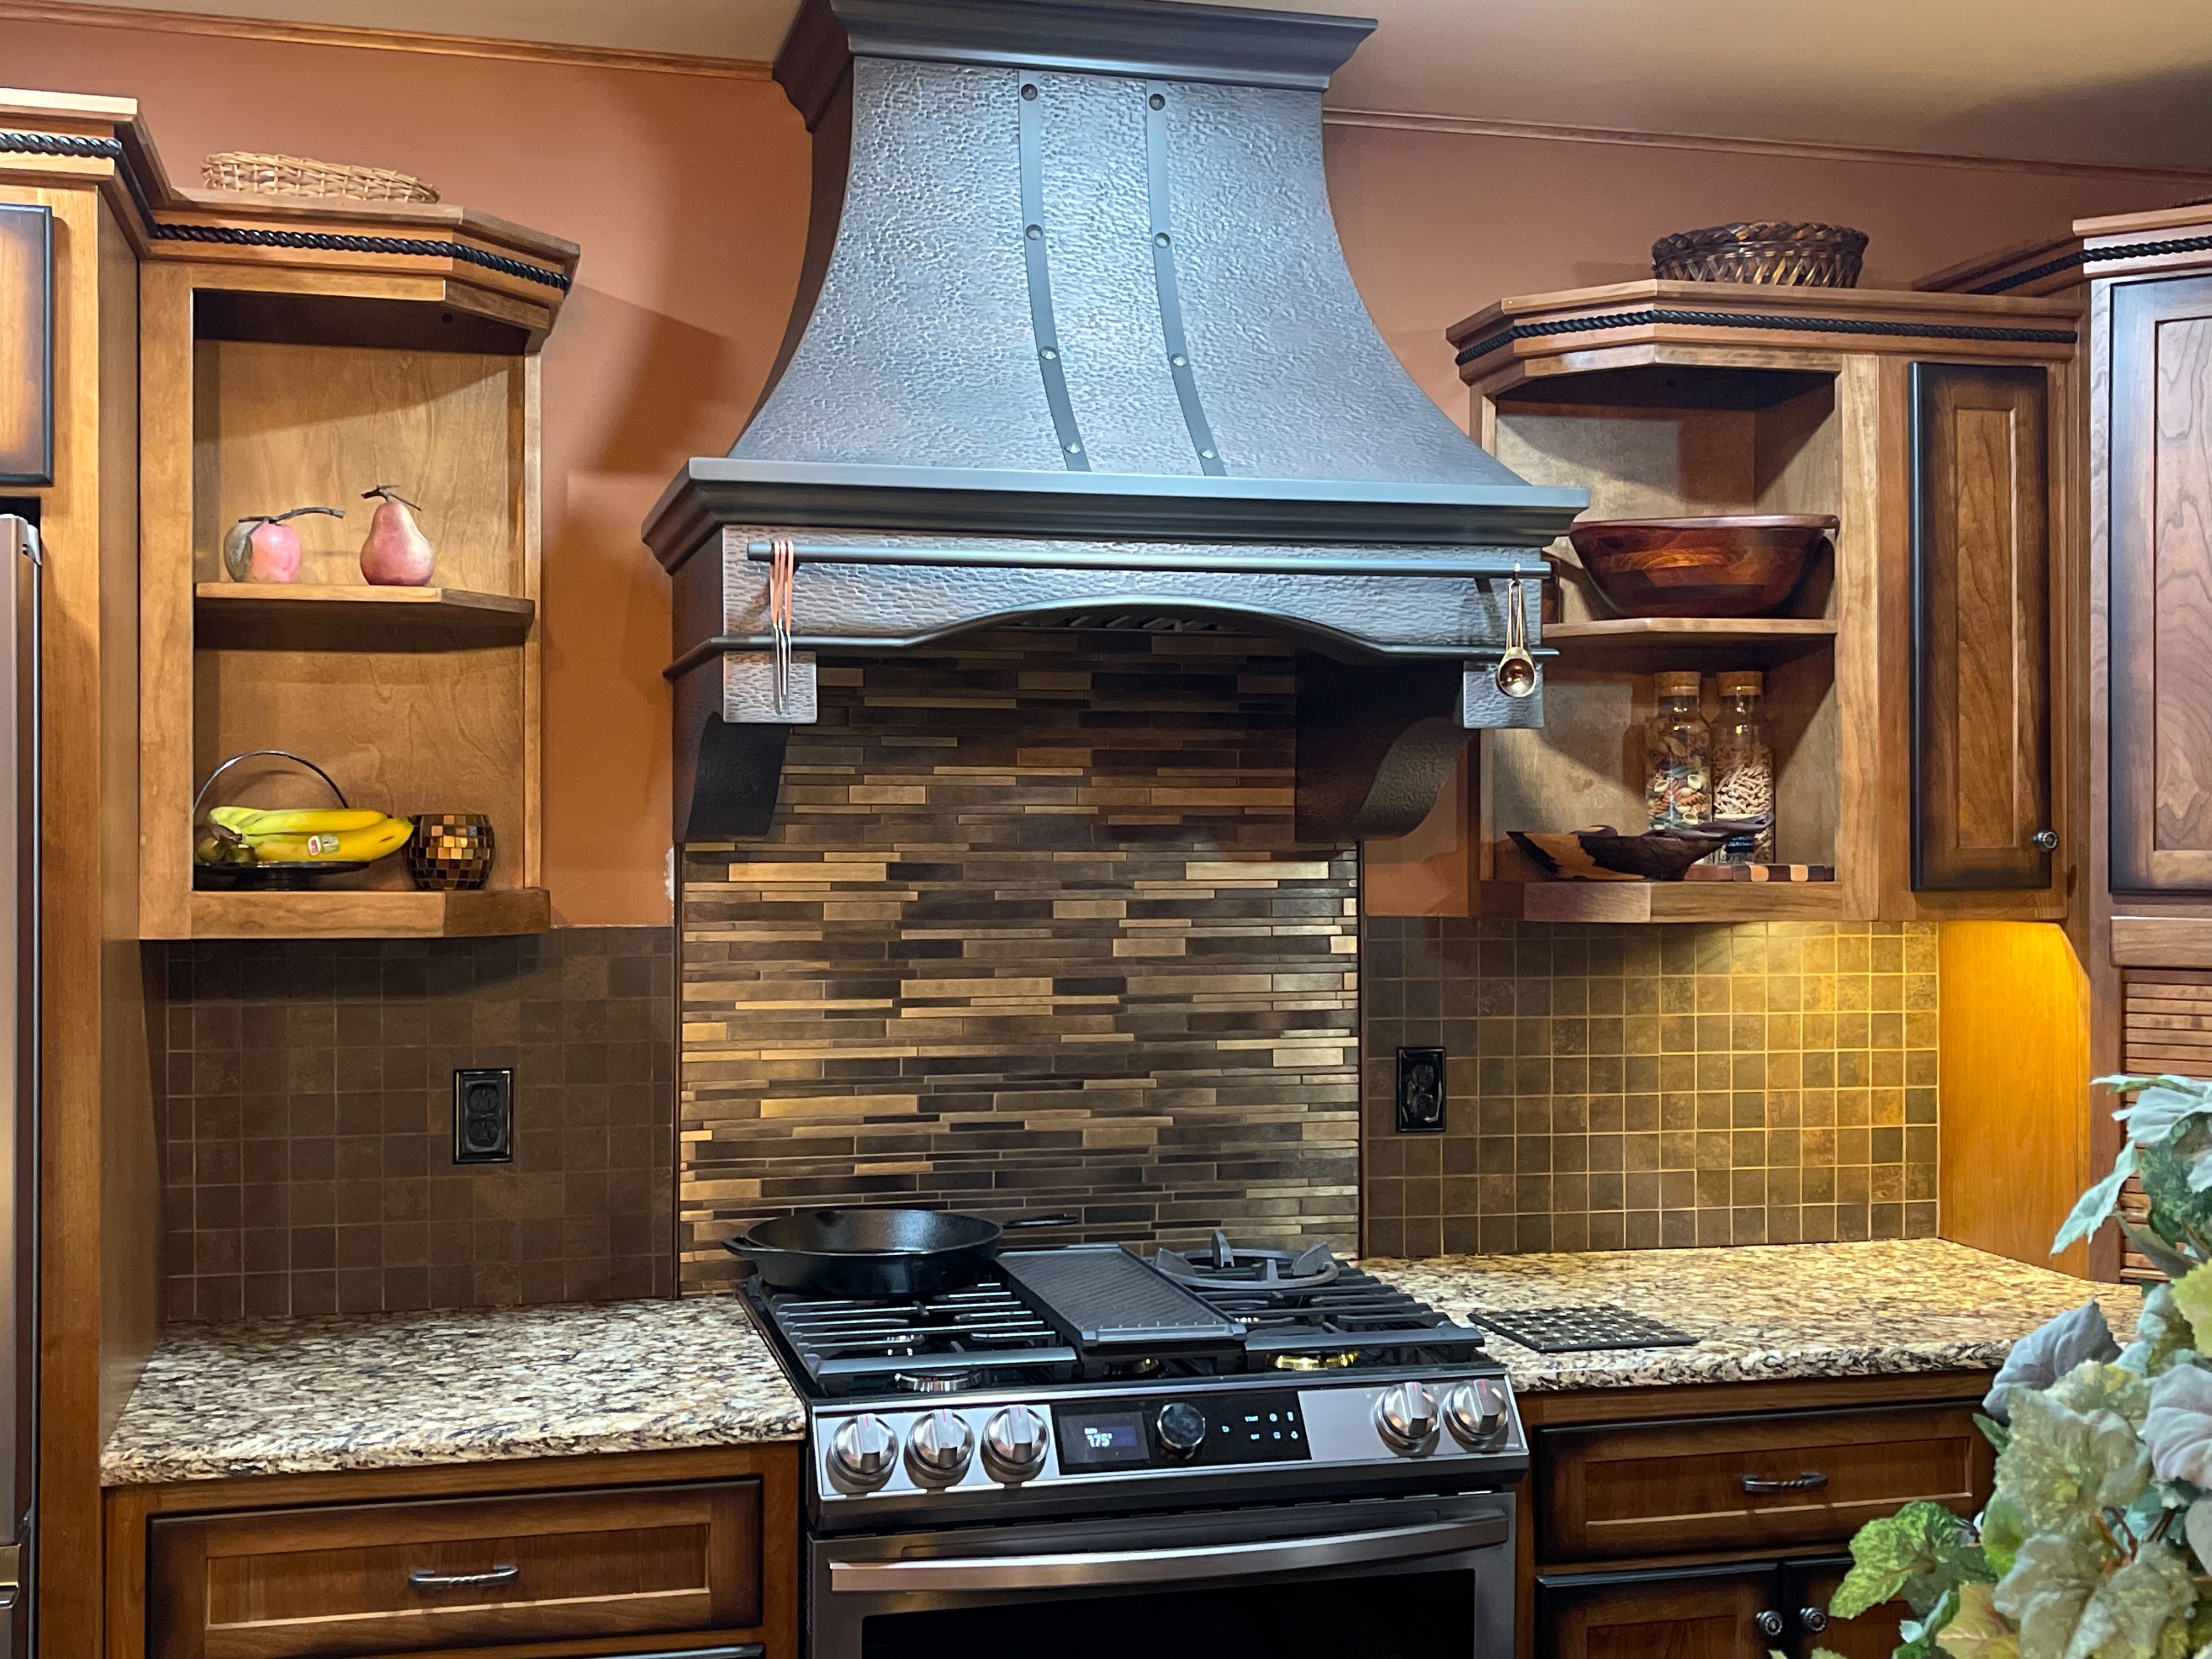 Kitchen design idea featuring,range hood options, timeless craftsman kitchen concepts, rich brown kitchen cabinets,stone kitchen countertops, and brick backsplash